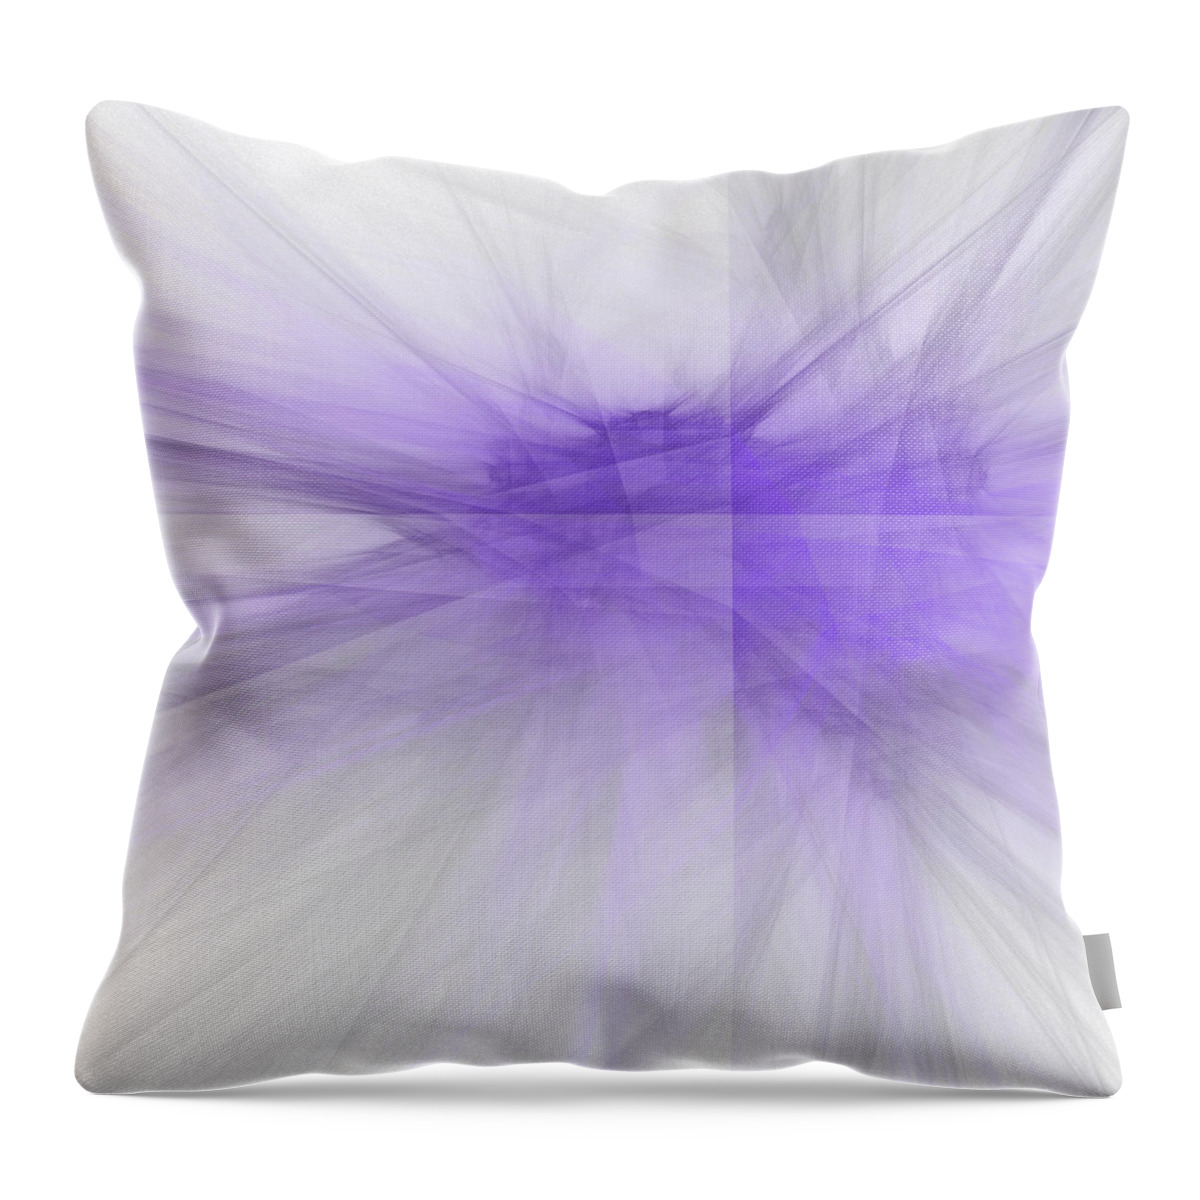 Rick Drent Throw Pillow featuring the digital art Purple Chrystalene by Rick Drent